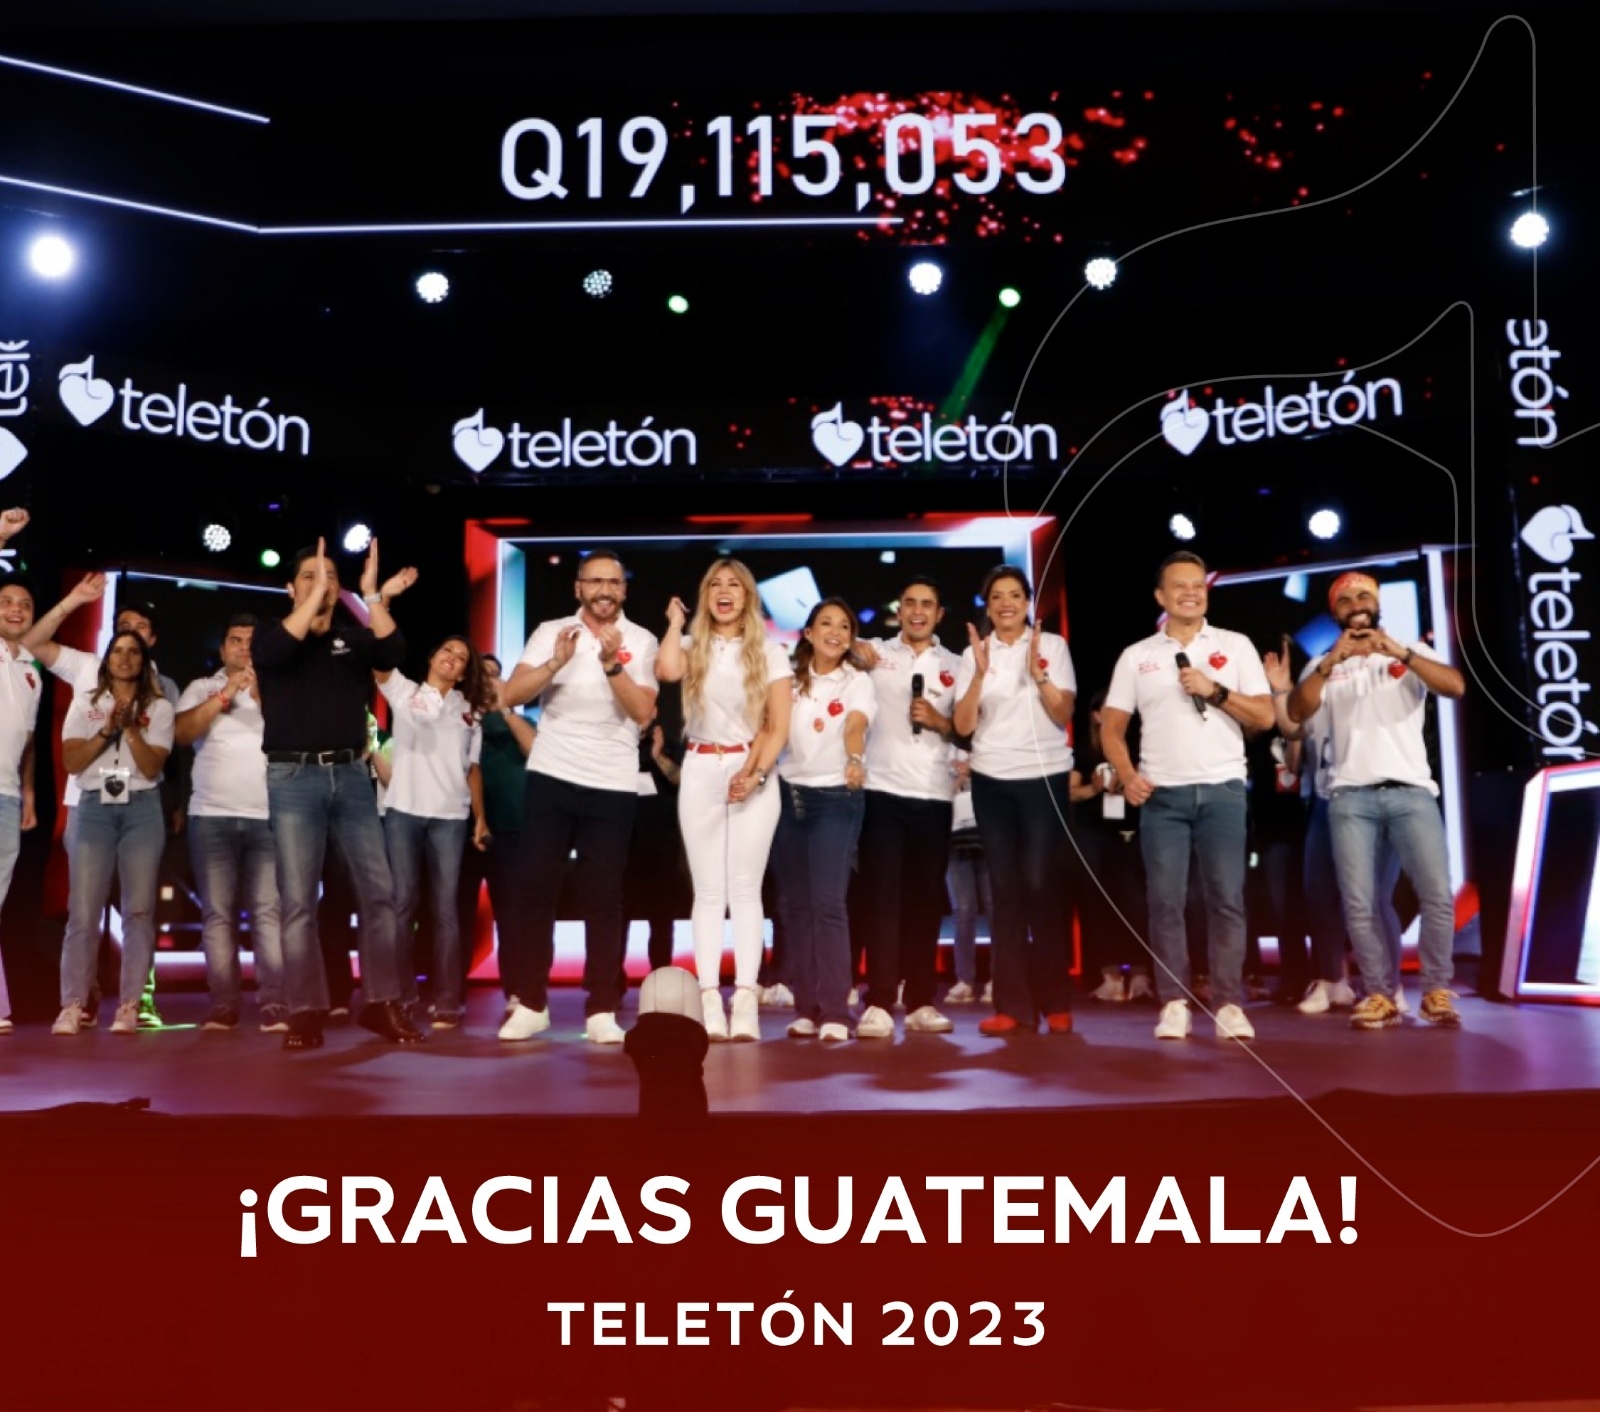 Teletón 2023 Guatemala